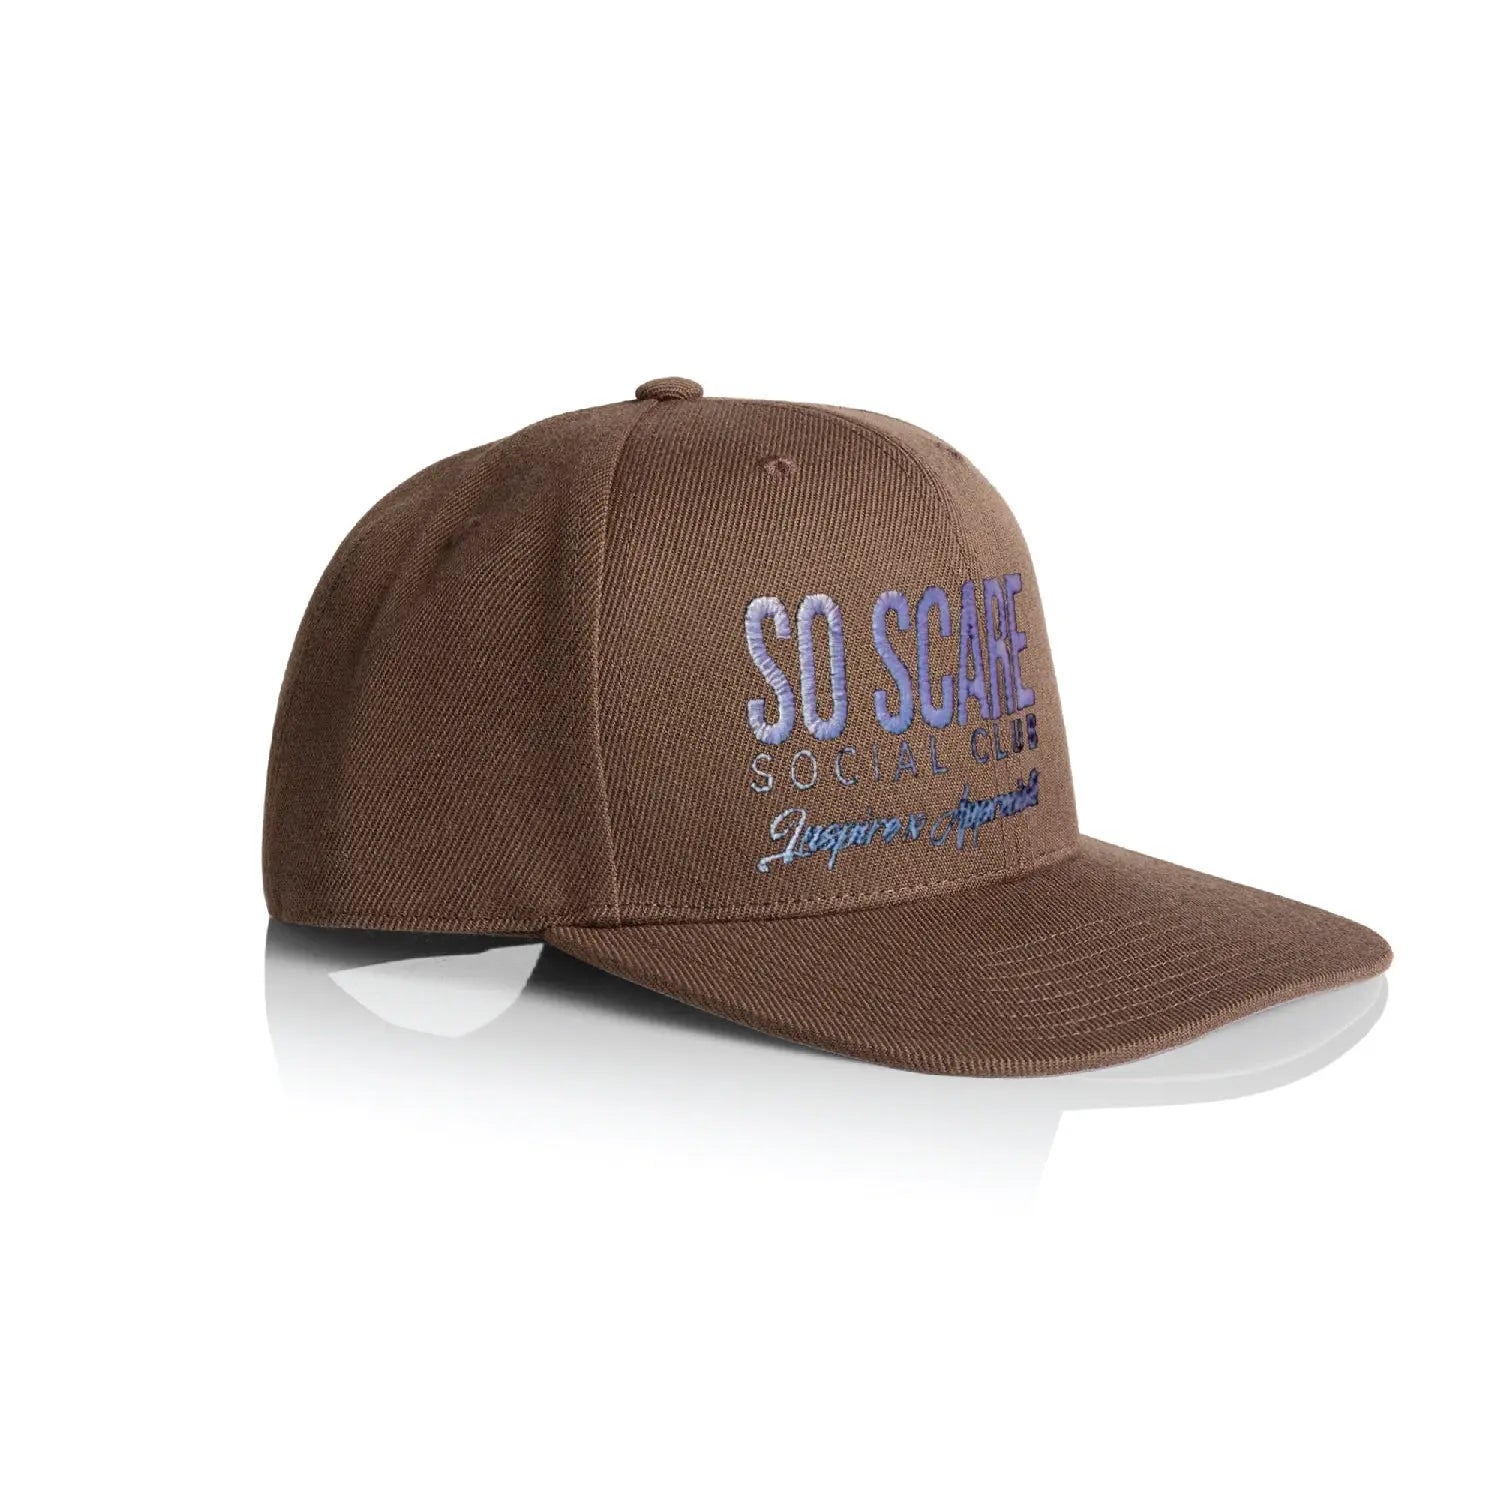 SNAPBACK HAT - BROWN SO SCARE SOCIAL CLUB